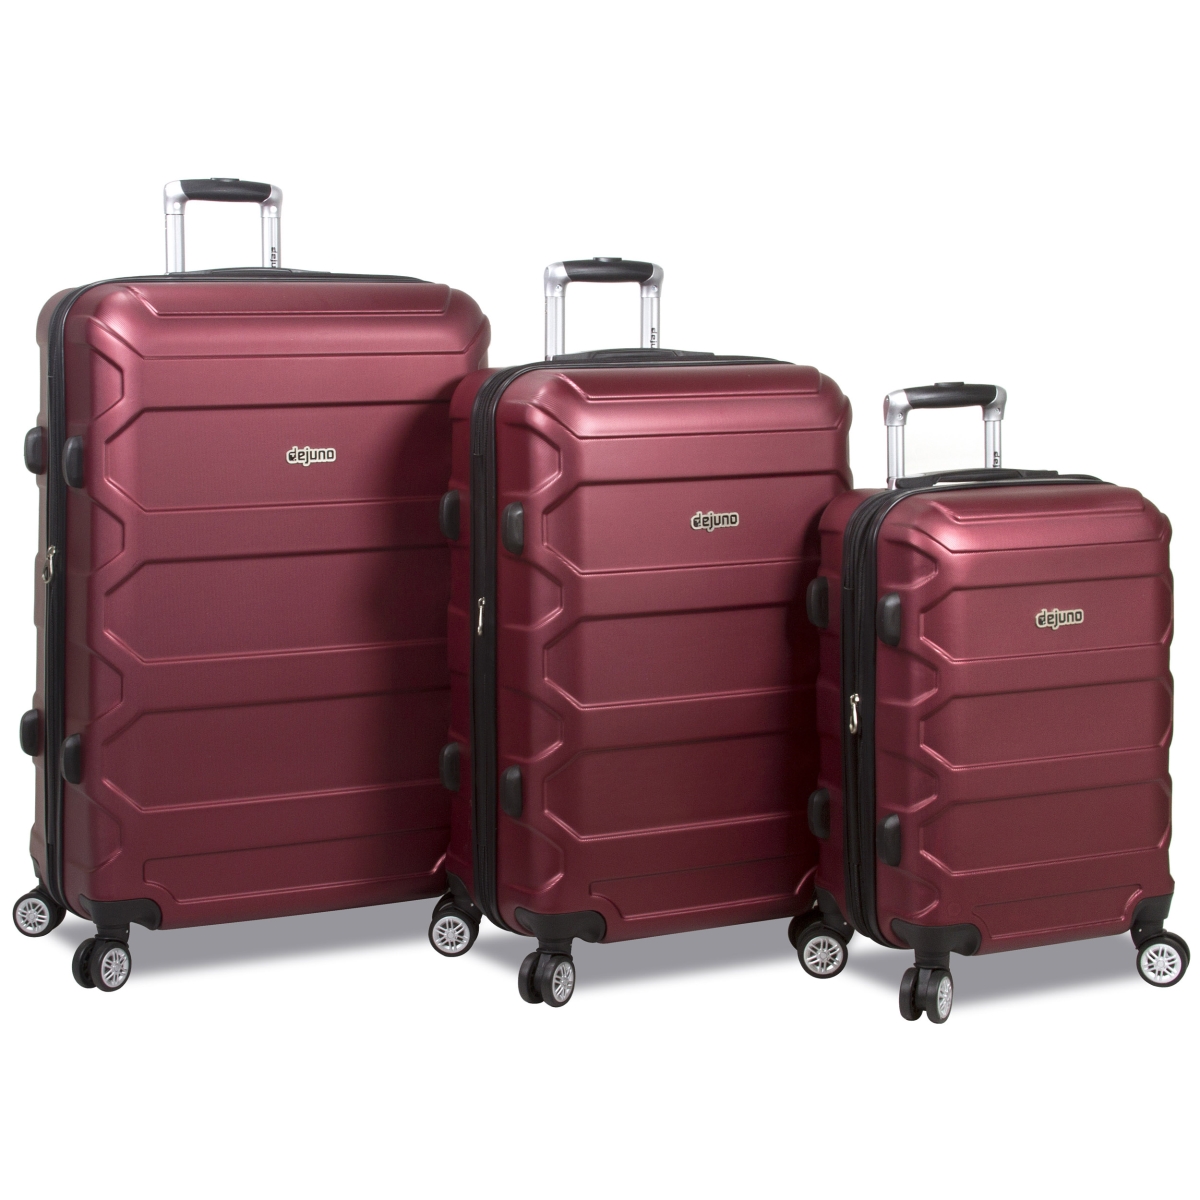 25dj-618e-burgundy Logan Hardside Spinner Combination Lock Luggage Set - Burgundy, 3 Piece